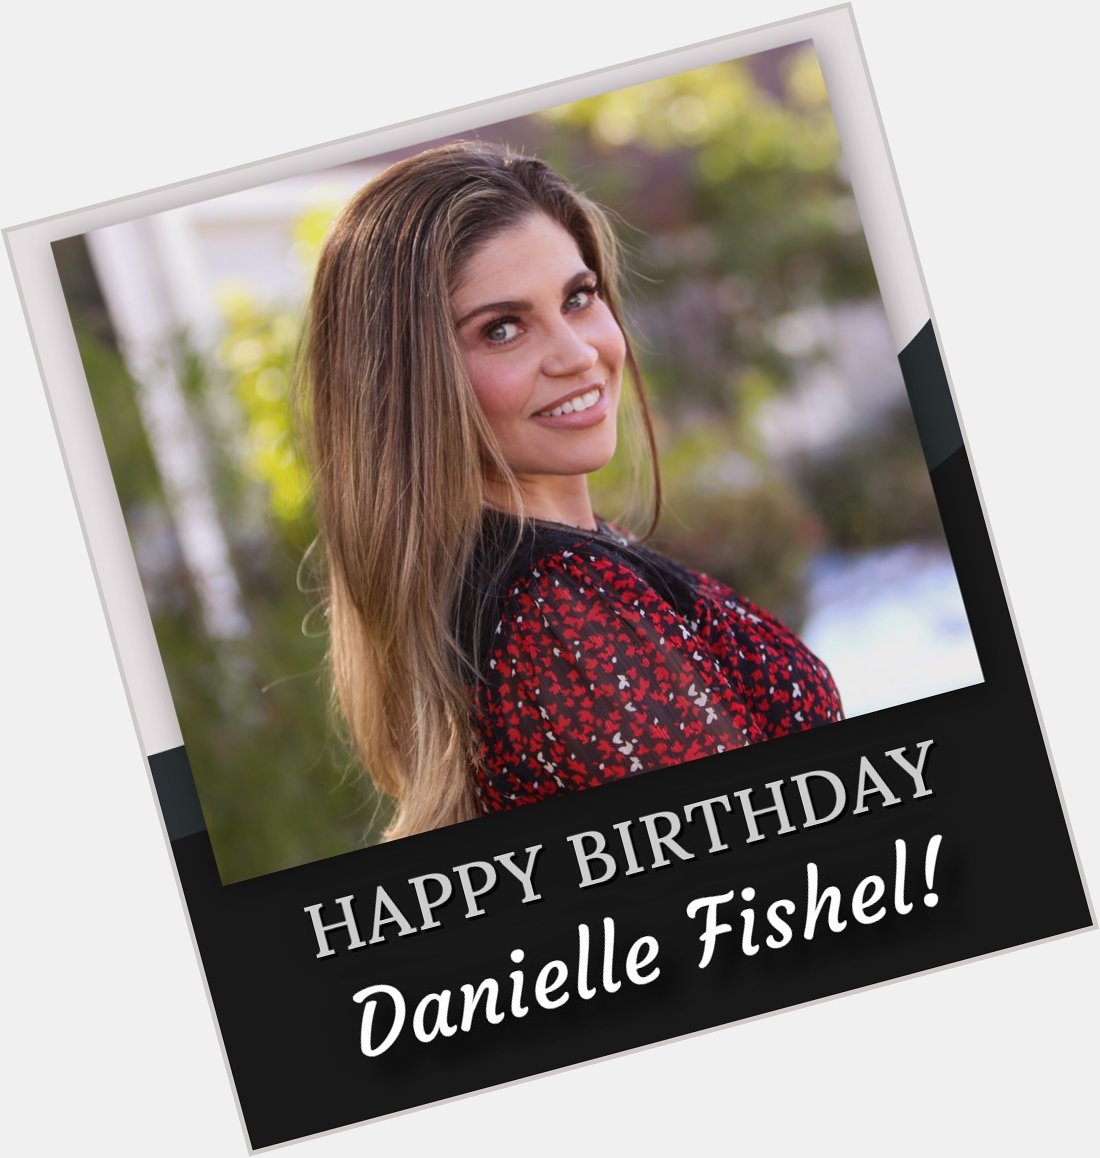 Happy birthday, Danielle Fishel! 